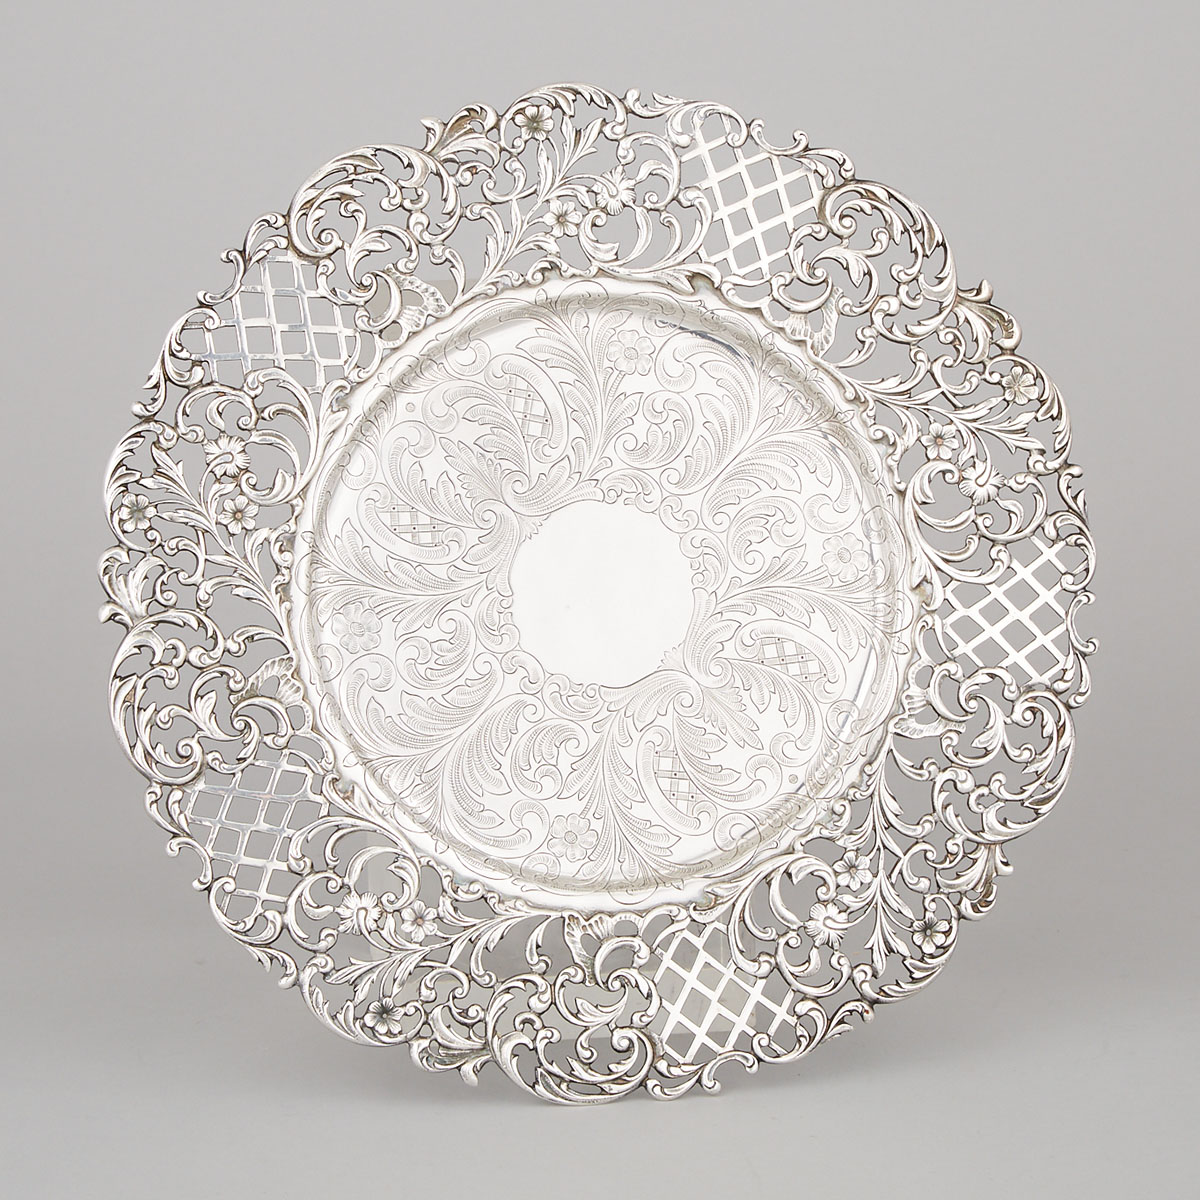 American Silver Pierced Cake Plate, Shreve, Crump & Low Co., Boston, Mass., late 19th century